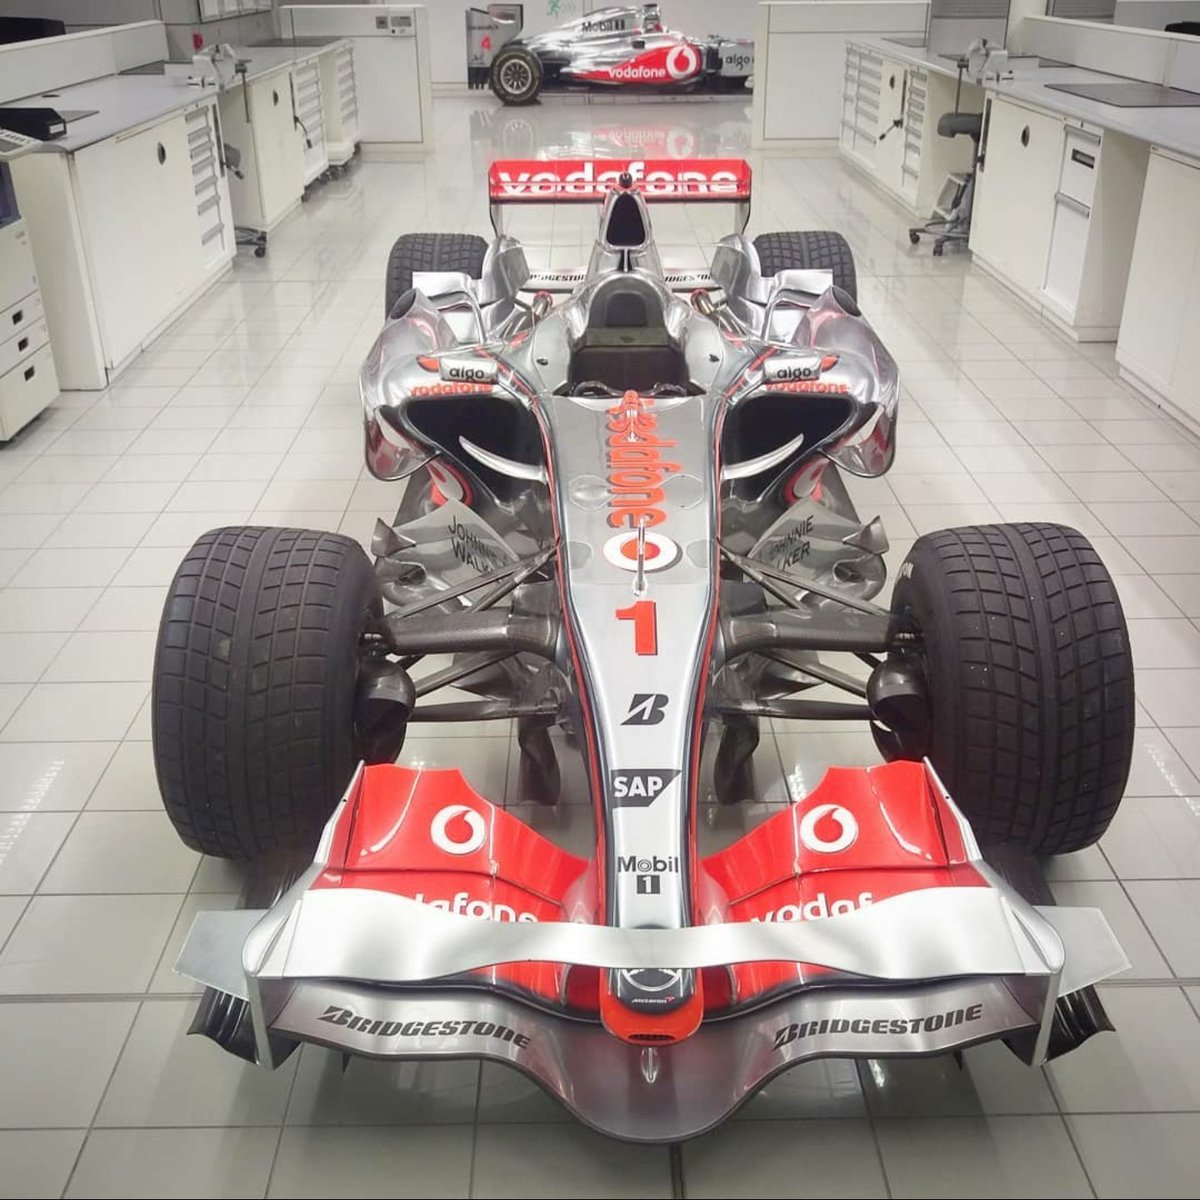 Look at this beauty 😍🥰

#MTCsnaps #McLaren60